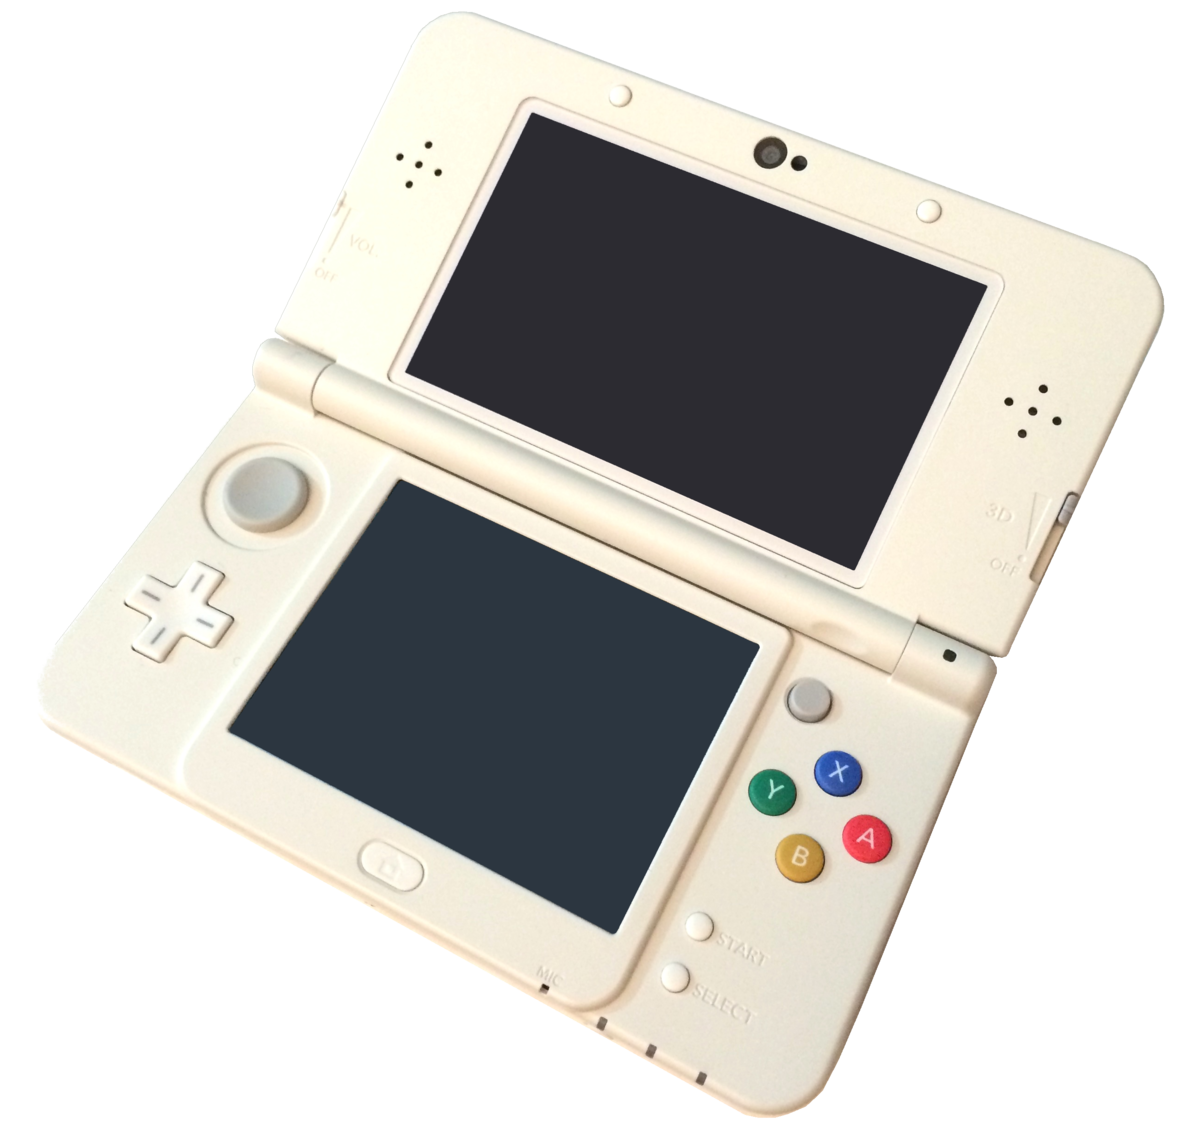 New Nintendo 3DS - Wikipedia